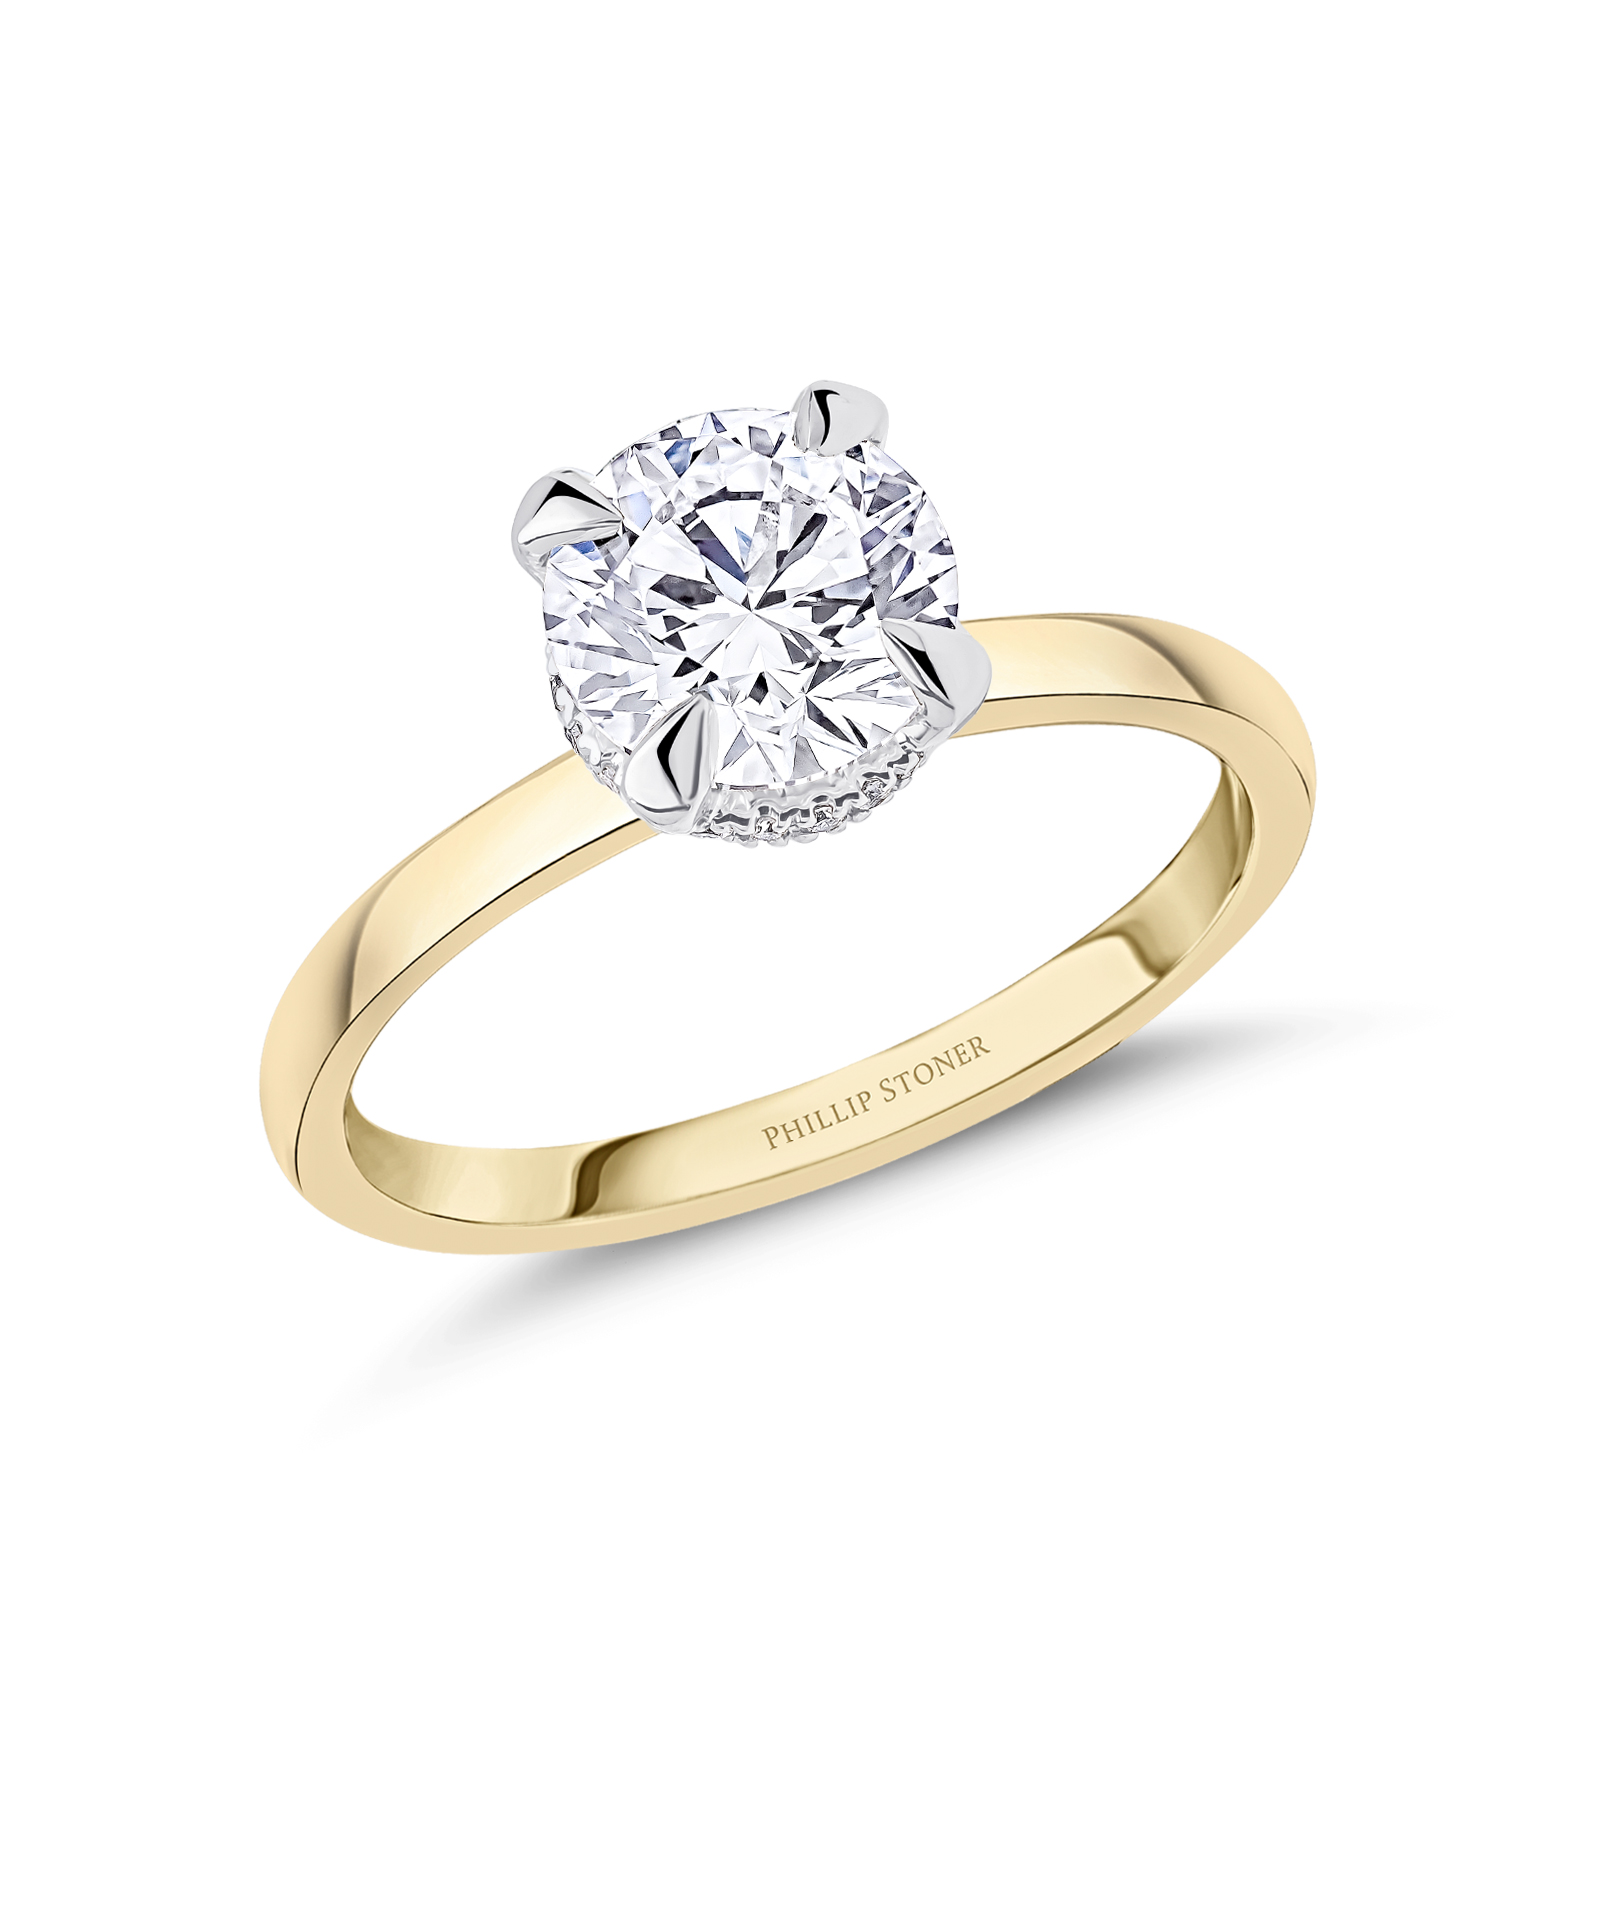 18ct Yellow Gold 1.5ct Round Brilliant Cut Lab Grown Diamond Crown Ring - Phillip Stoner The Jeweller